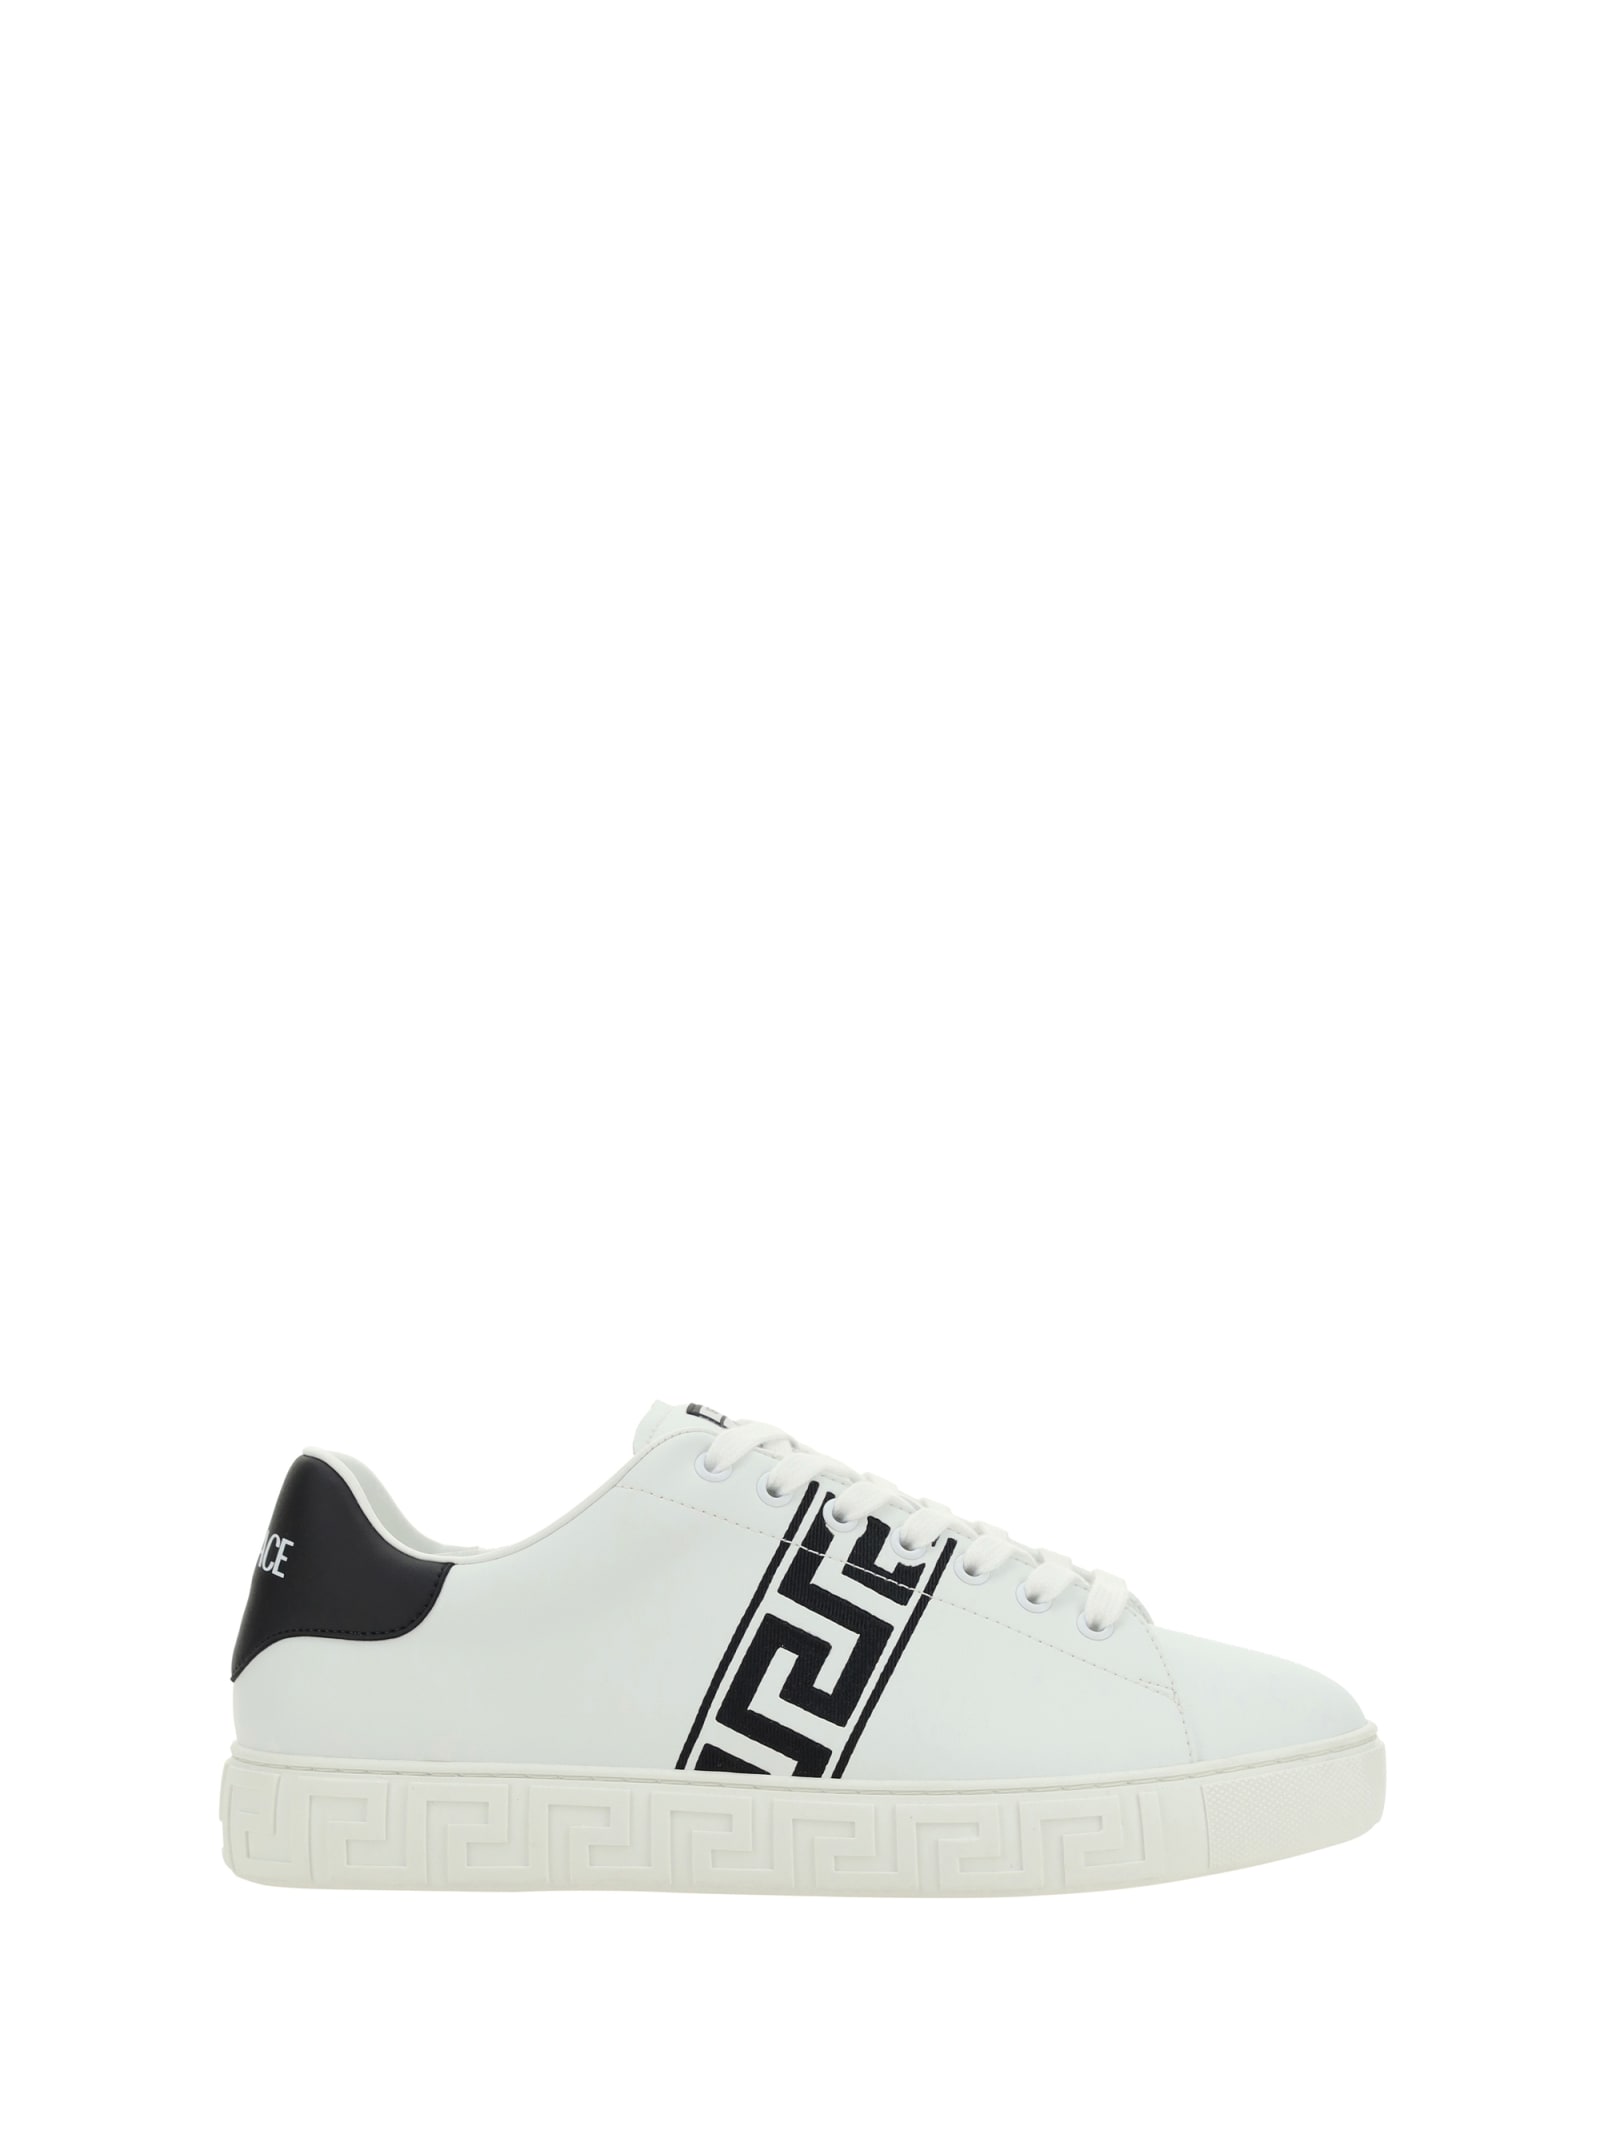 Shop Versace Low Top Sneakers In White/black